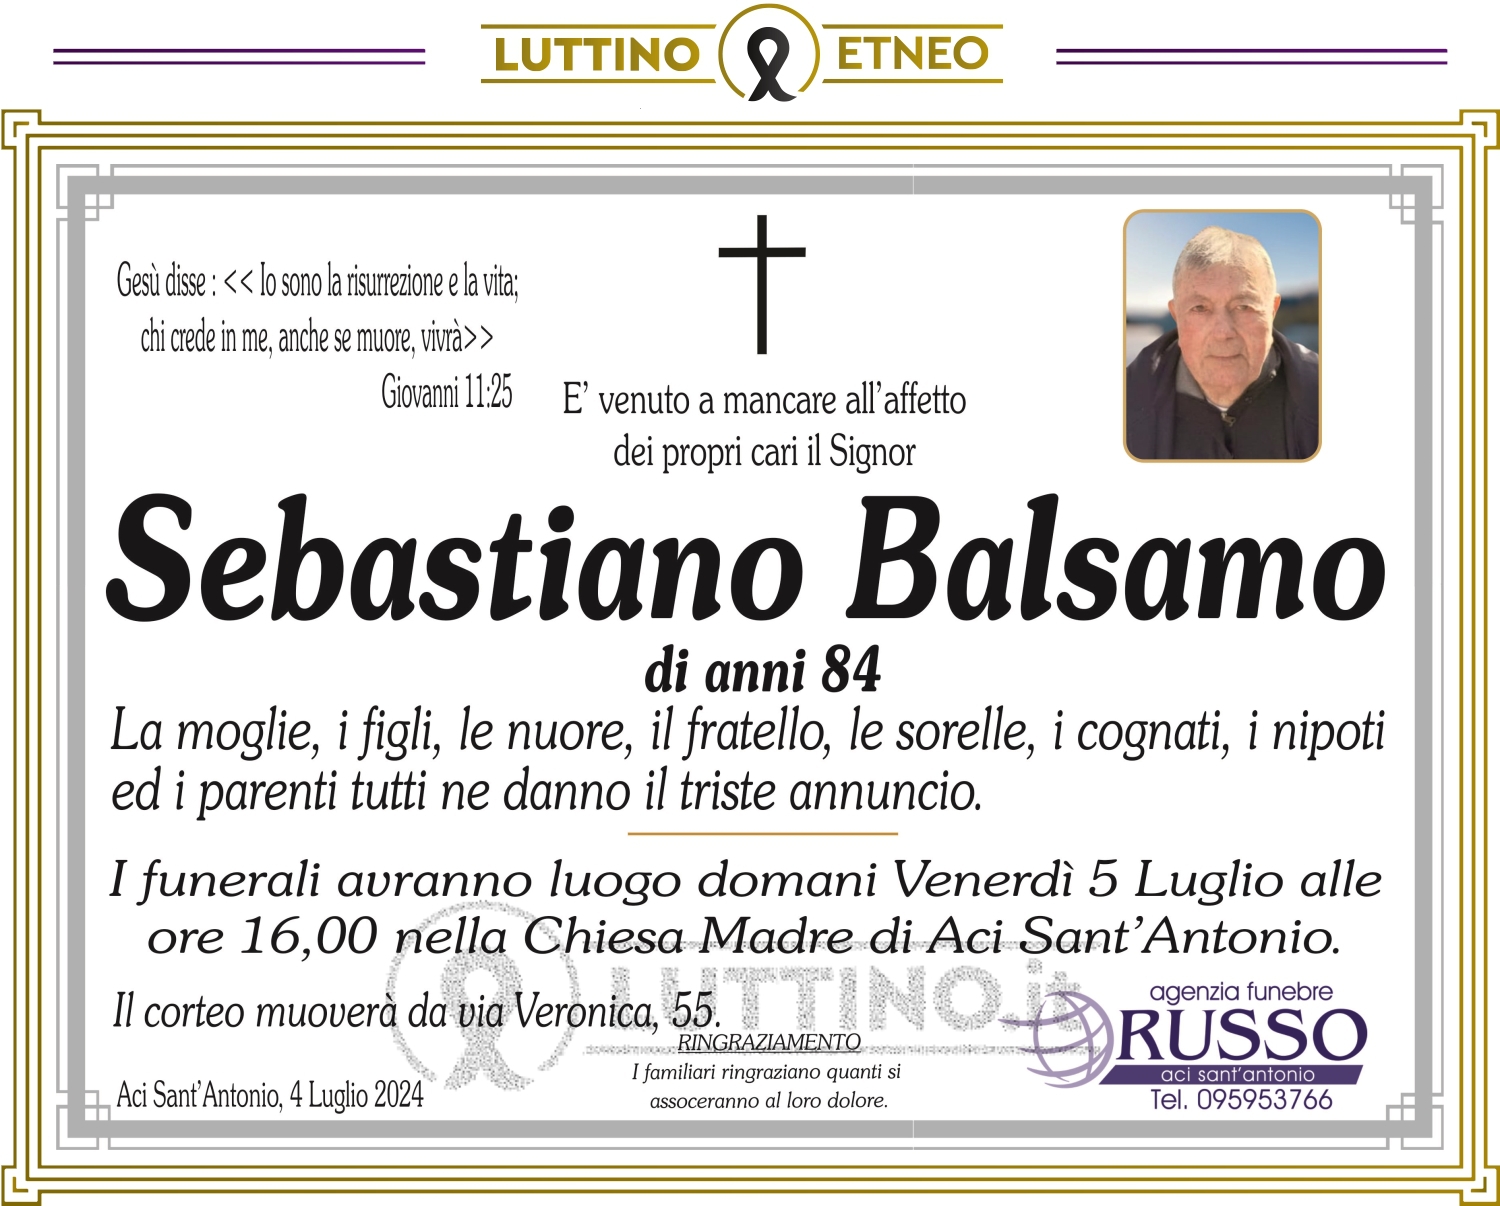 Sebastiano Balsamo